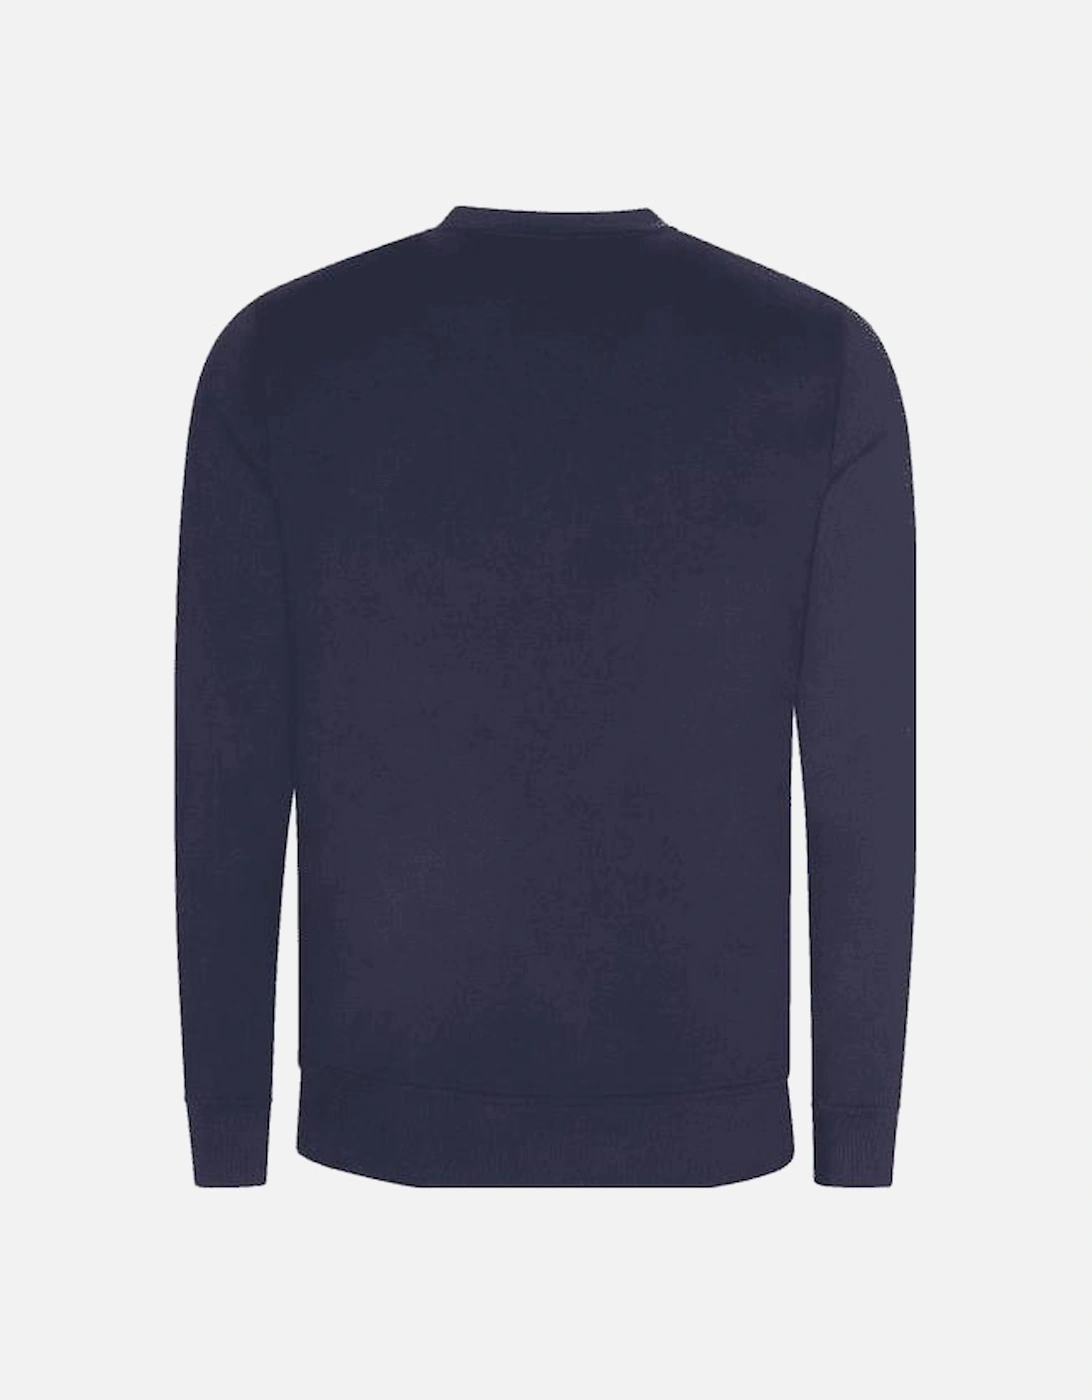 Cotton Greyfield Pullover Navy Sweatshirt